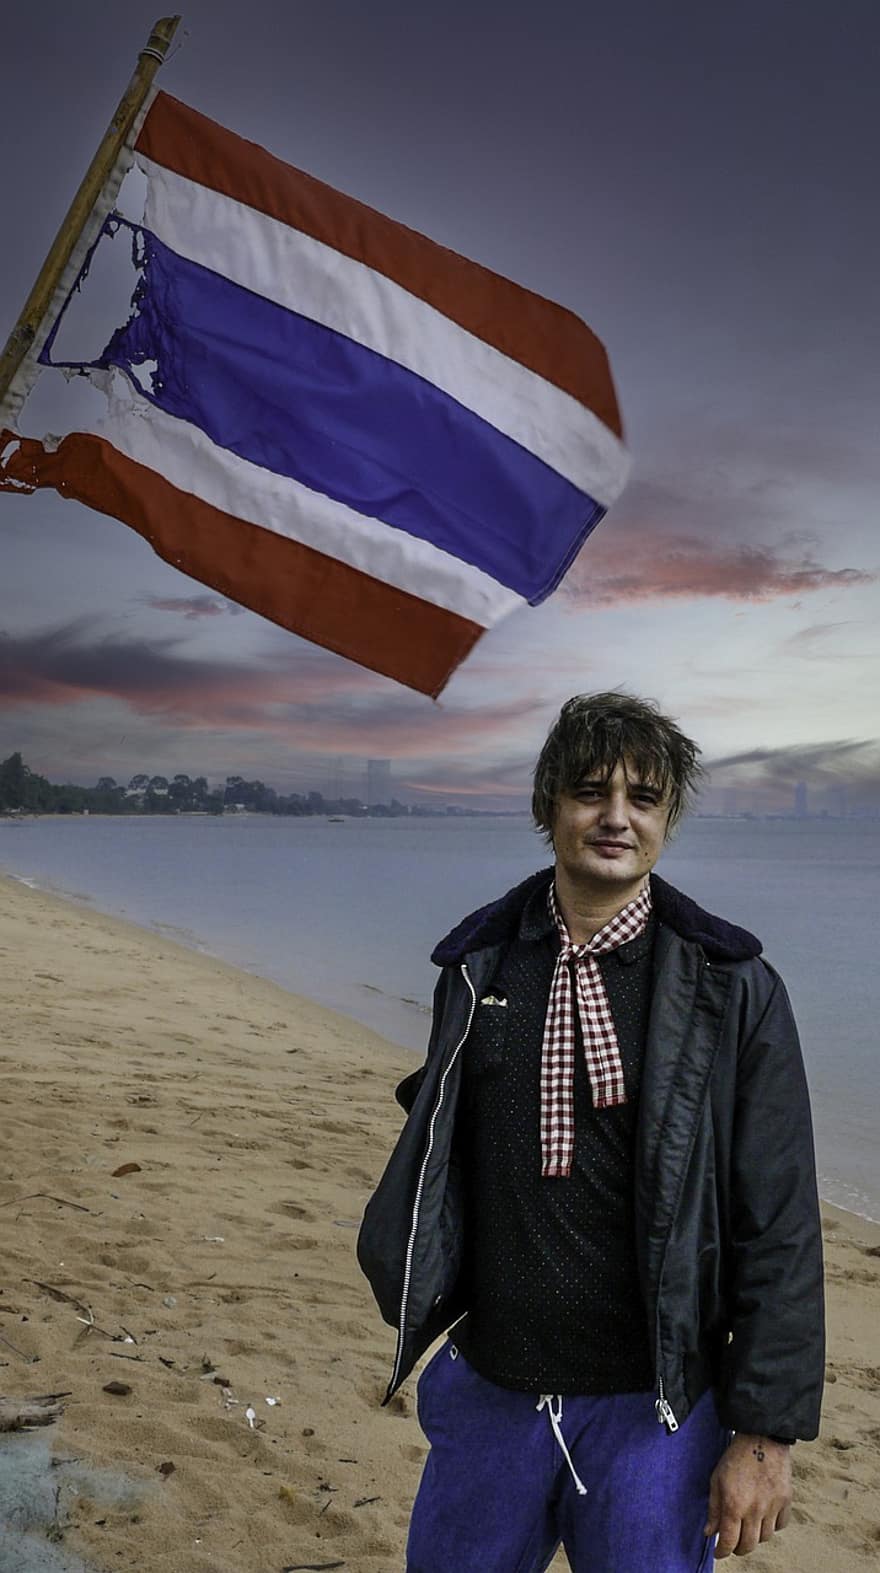 Pete Doherty, I libertini, indie, rock and roll, Tailandia, Bang Sara, uomini, una persona, adulto, sorridente, allegro